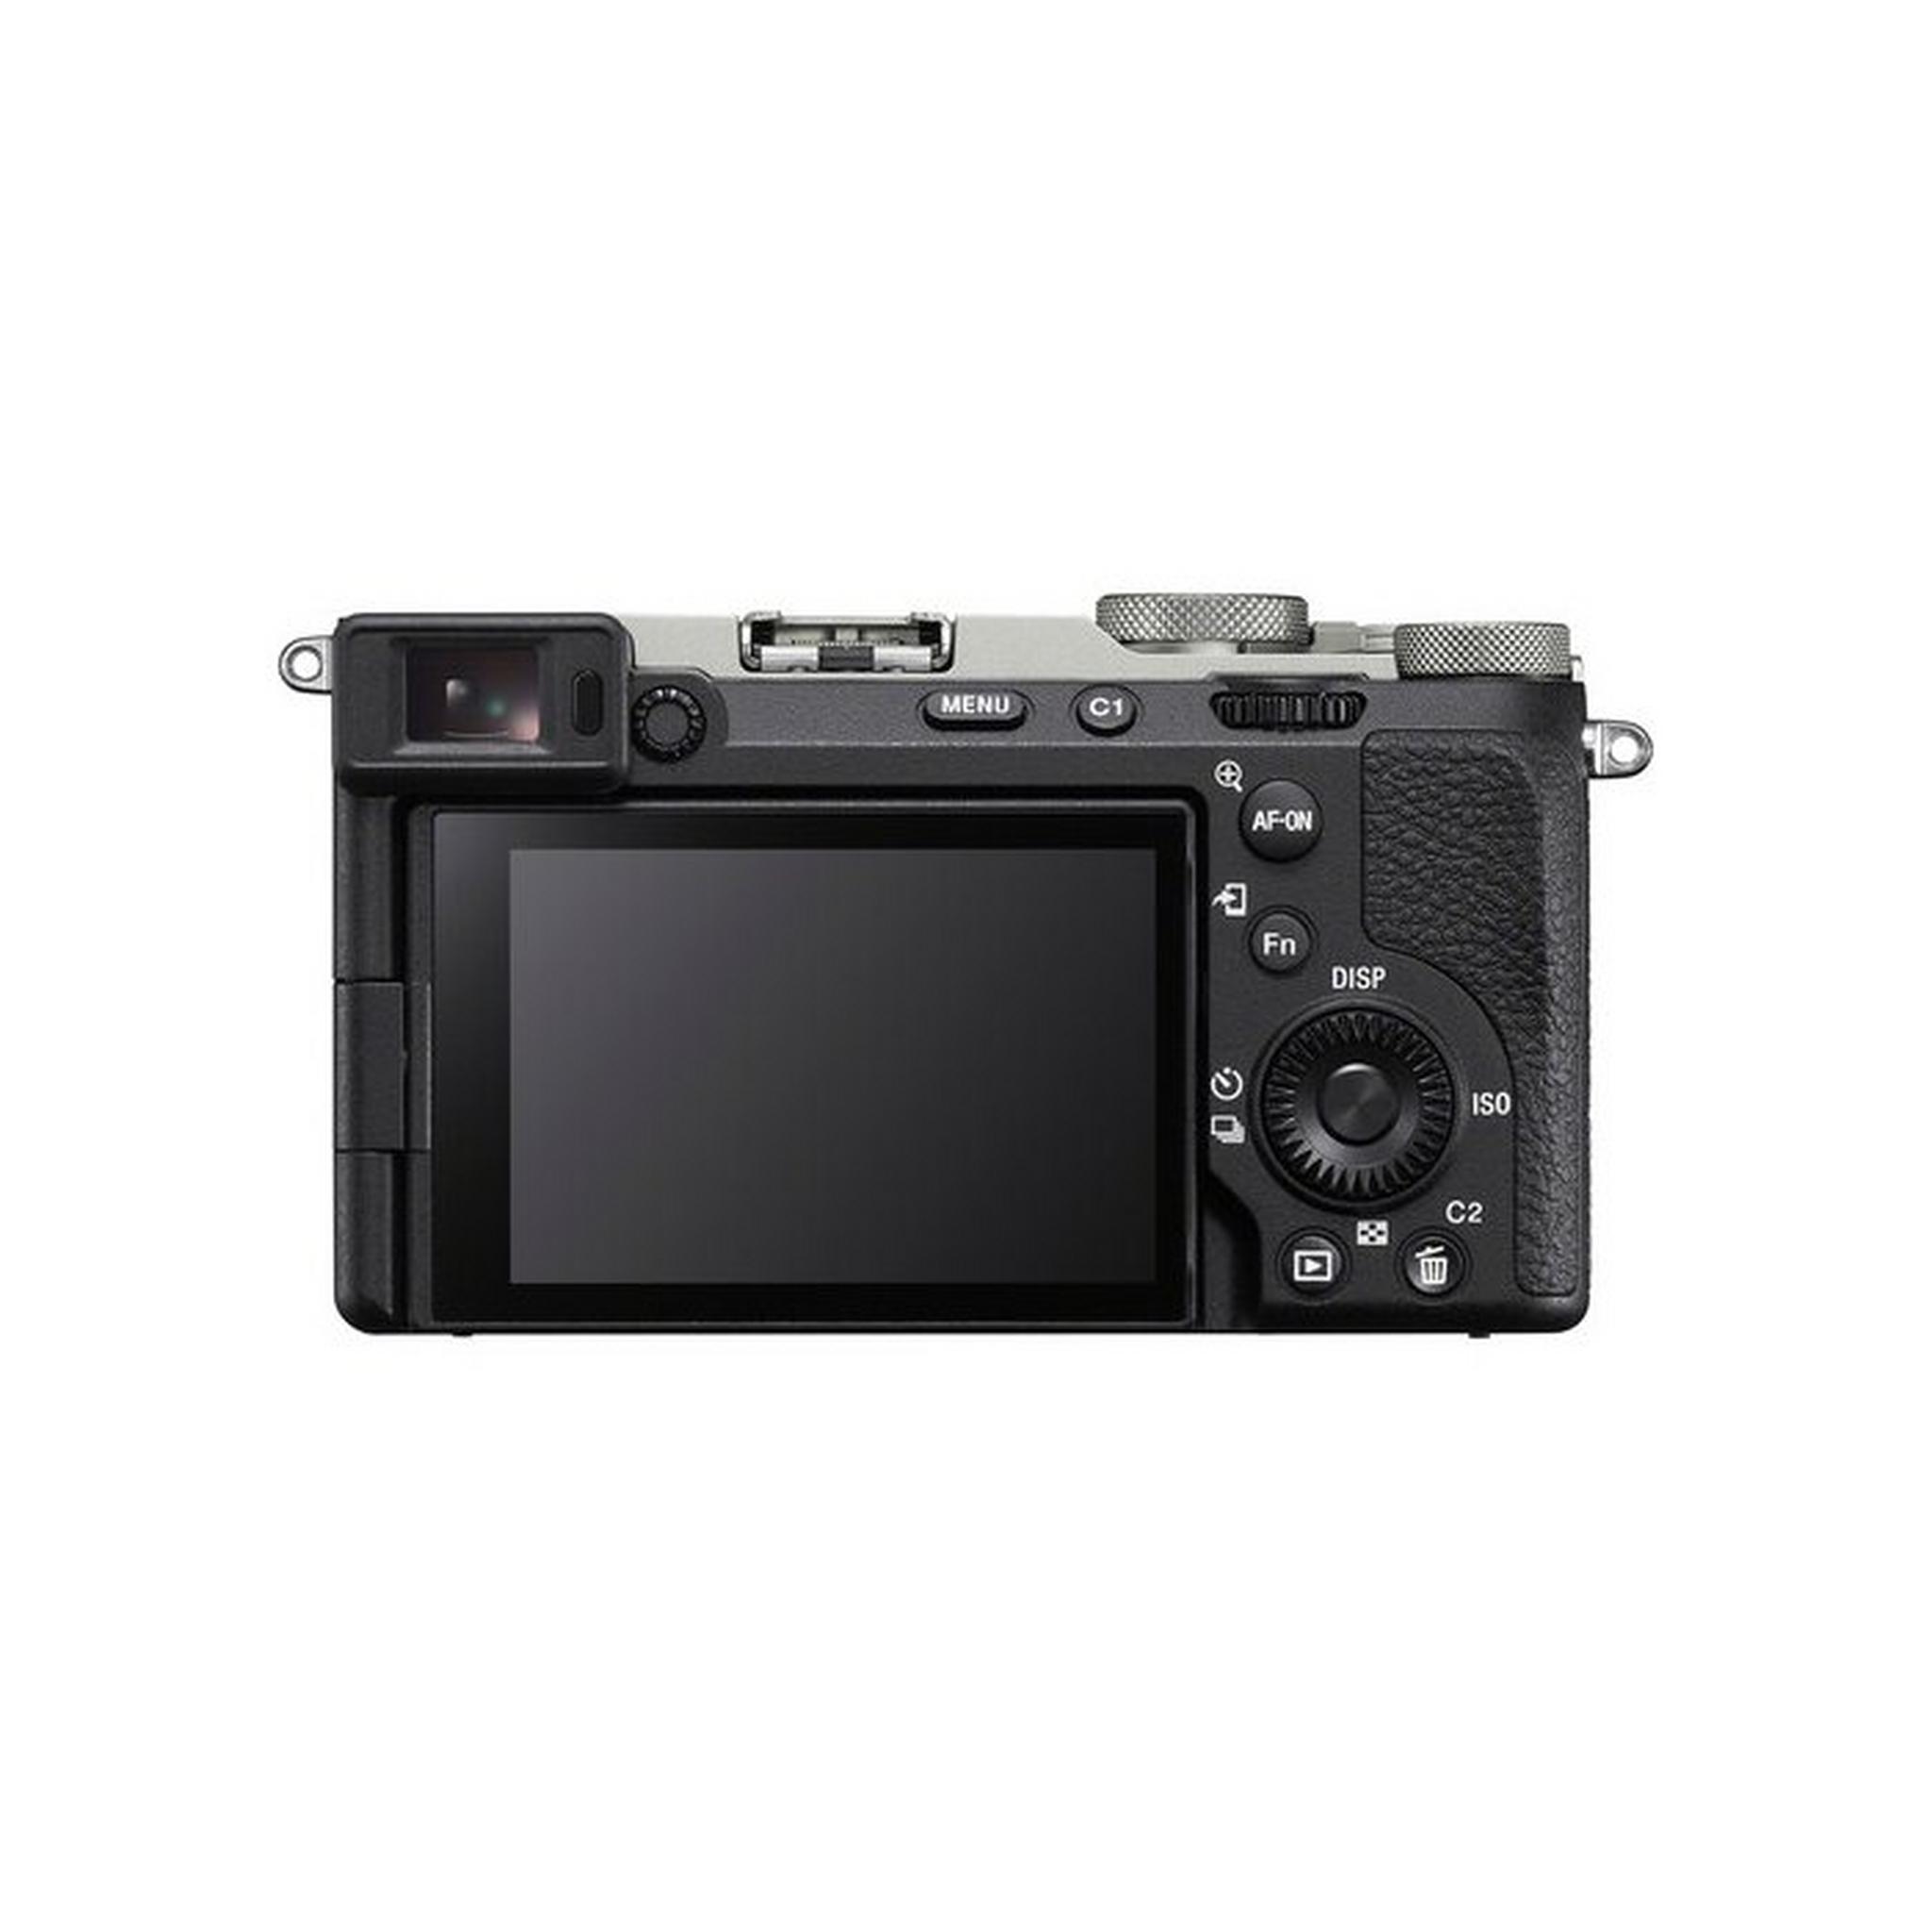 Sony Alpha AC2 Camera + 28-60MM LENS, 7.5 cm, ILCE-7CM2LSQAF1– Silver